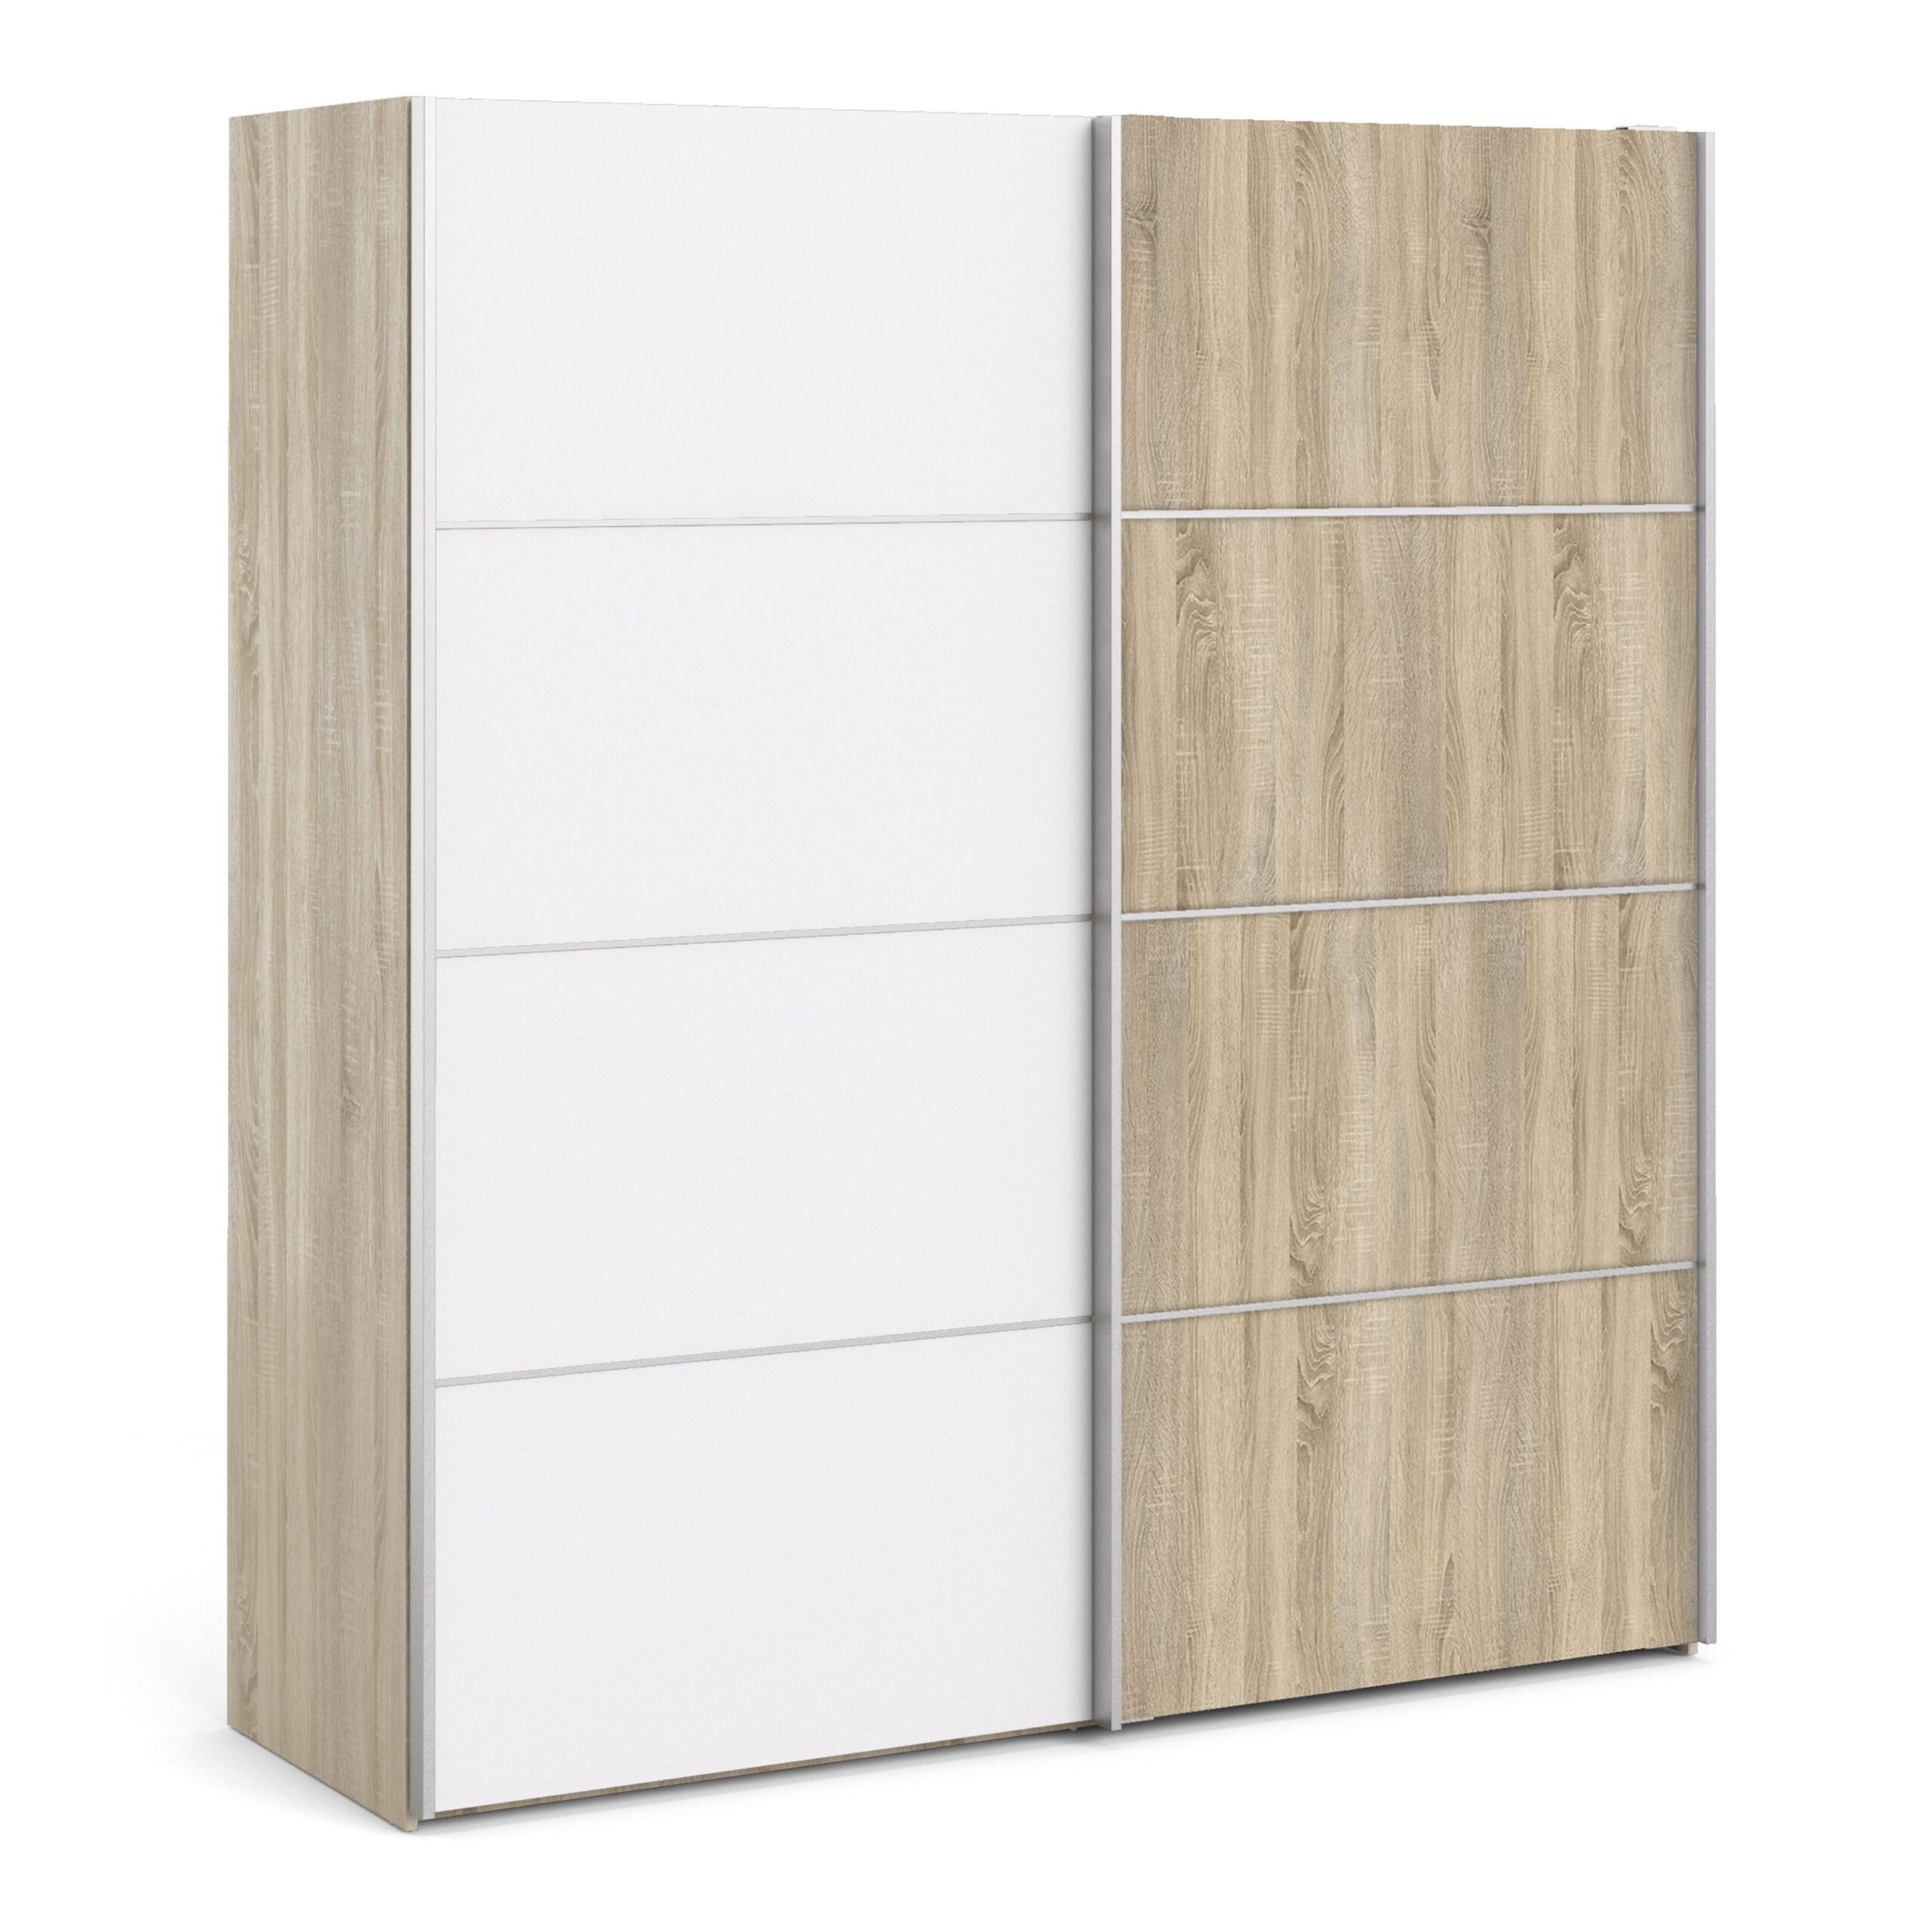 Phillipe Wardrobe Oak White Oak Doors Two Shelves